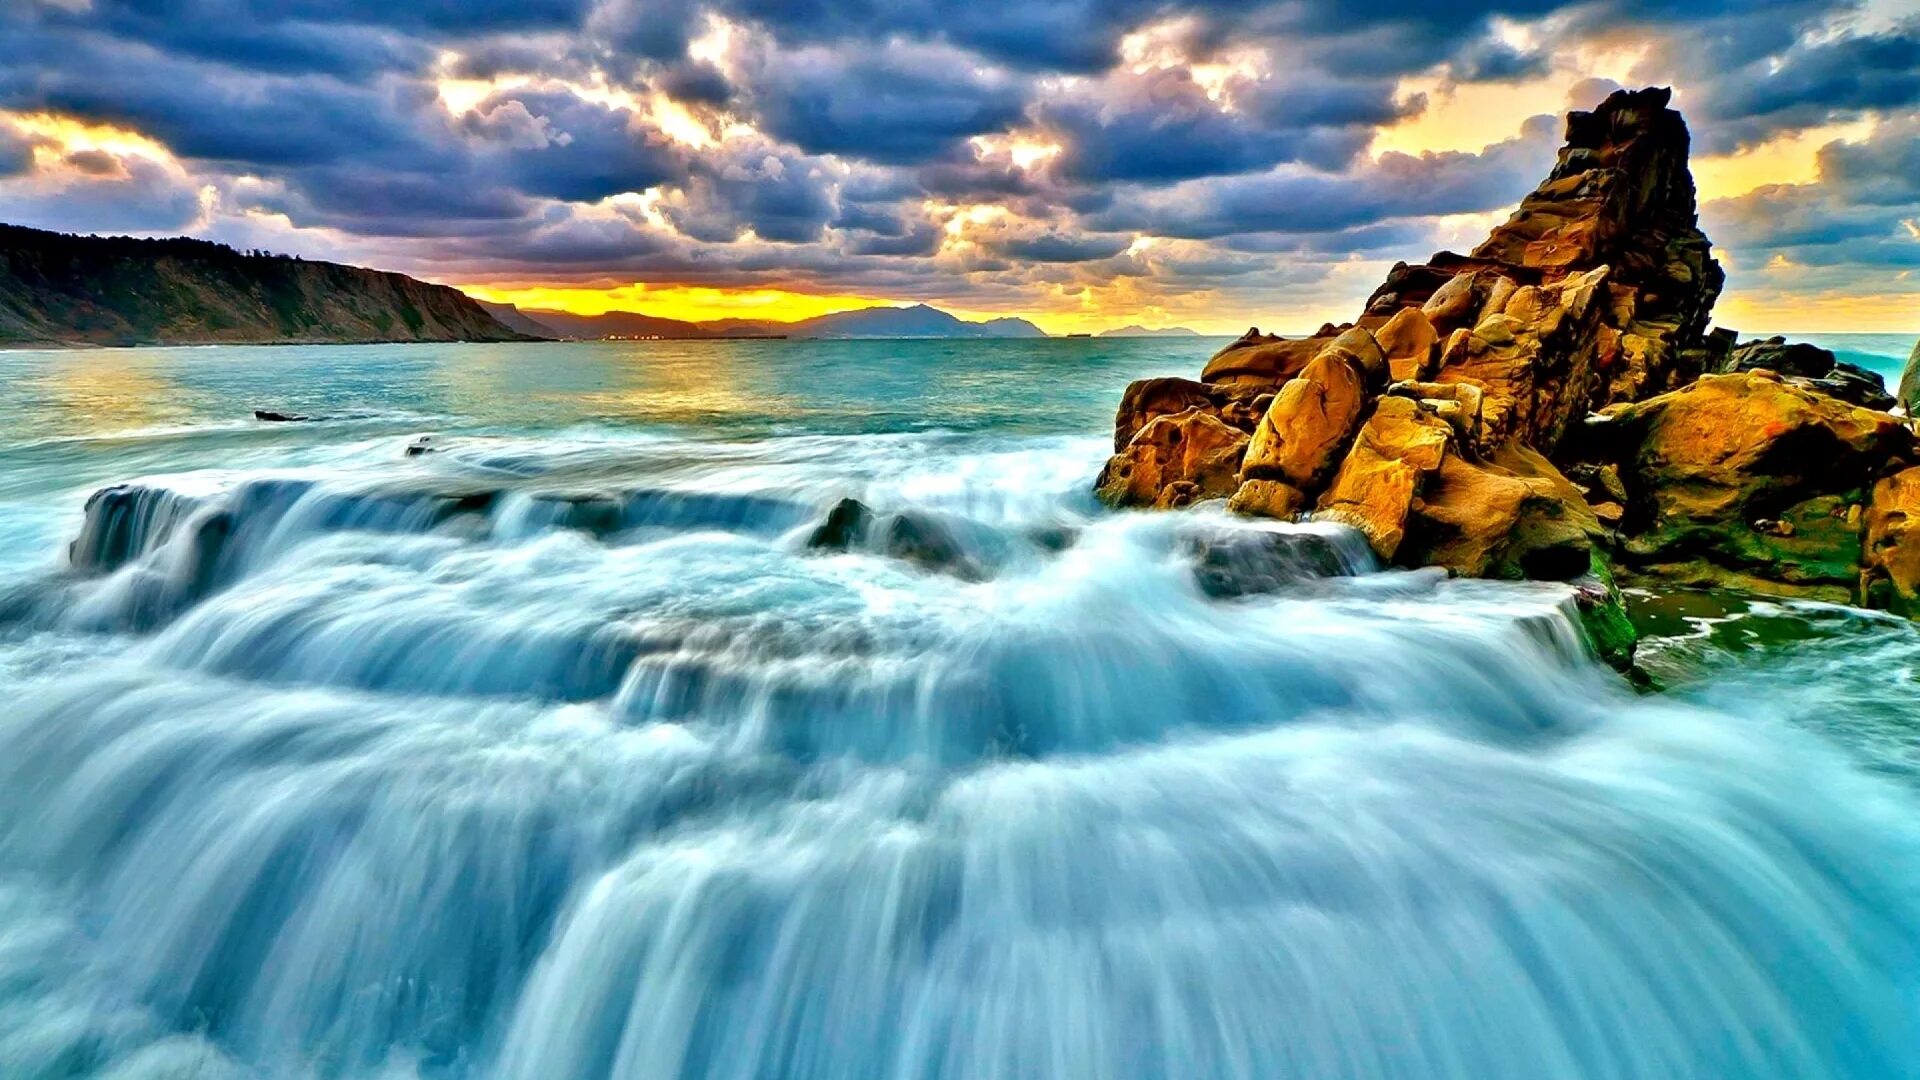 Природа море. Водопад в море. Водопад в горах. Красивые пейзажи с водопадами. Океан море водопад